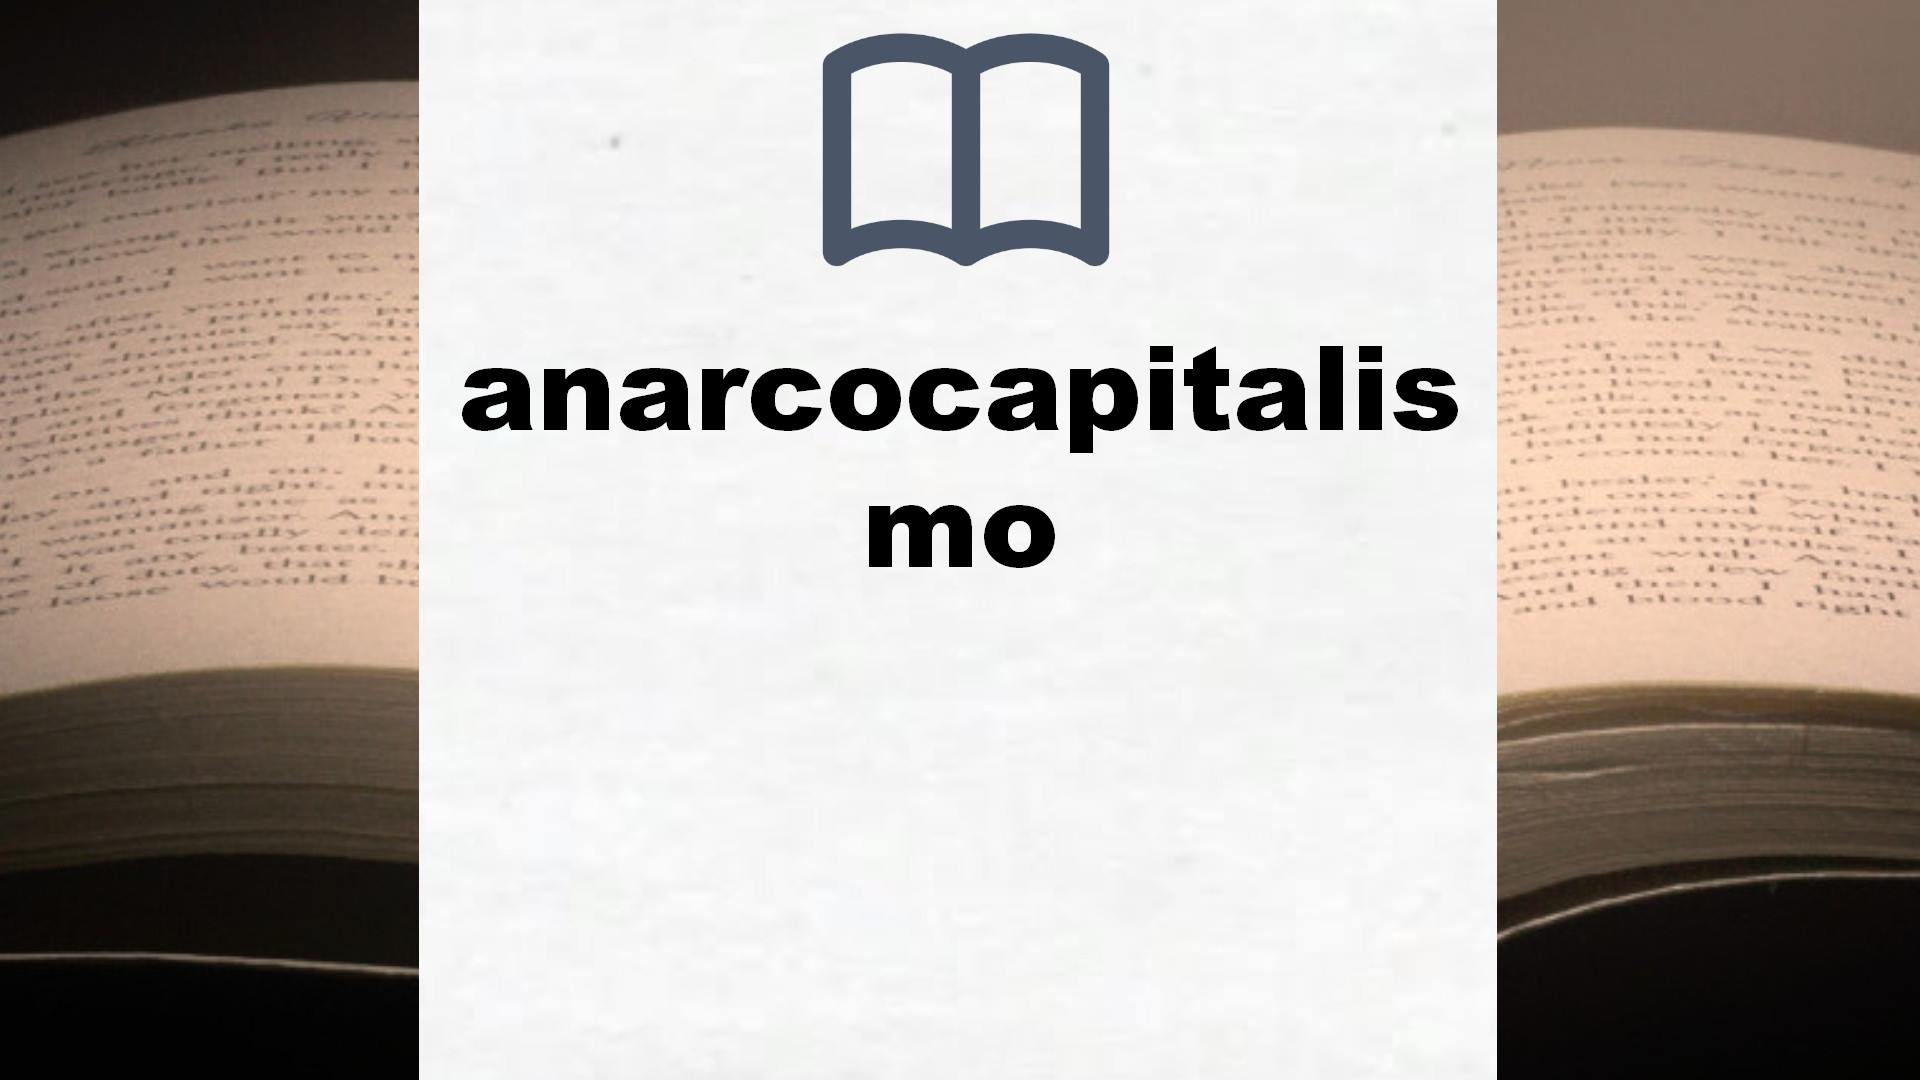 Libros sobre anarcocapitalismo